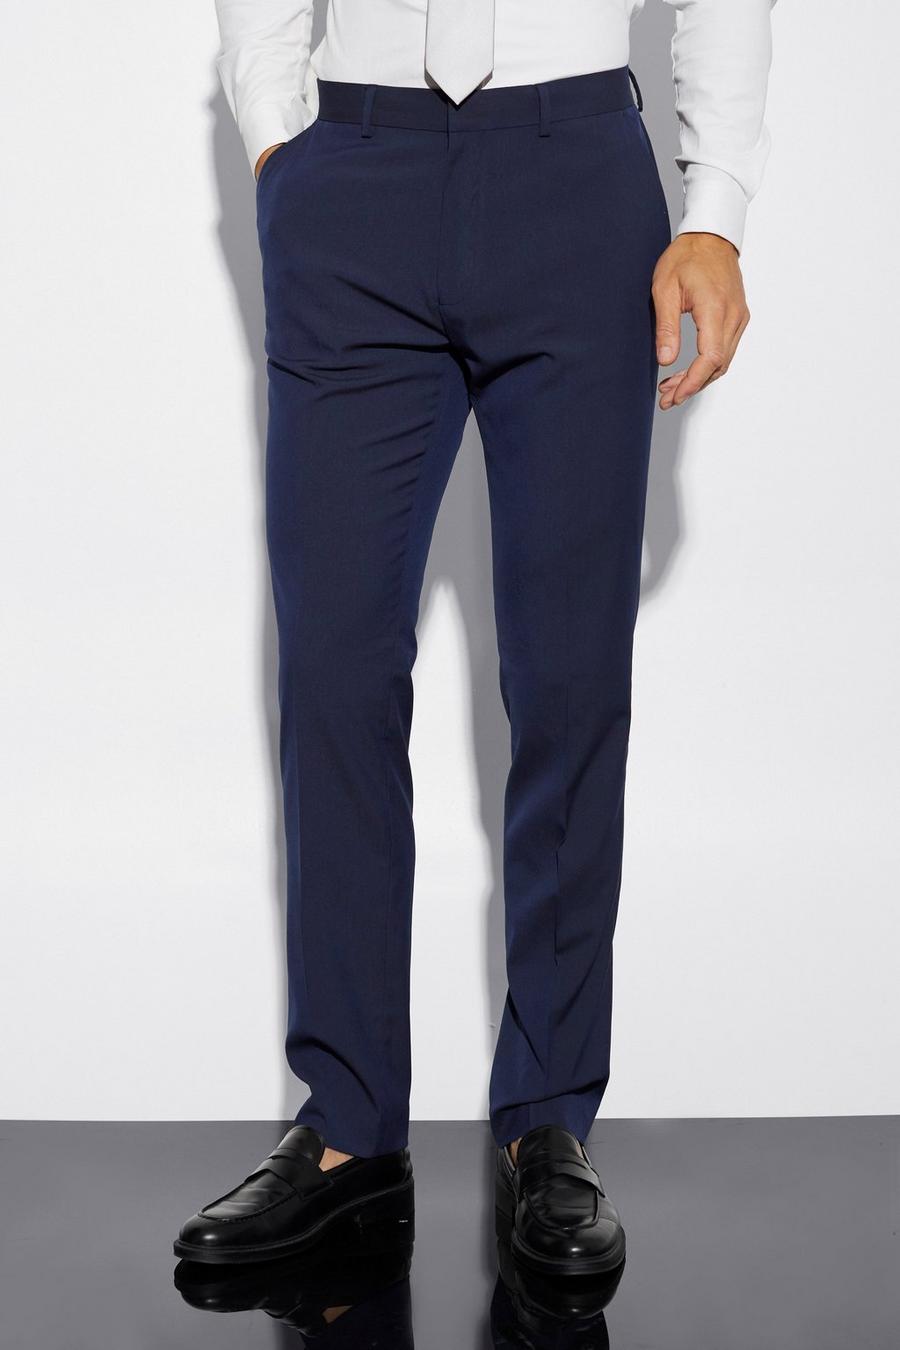 Pantalón de traje Tall ajustado, Navy azul marino